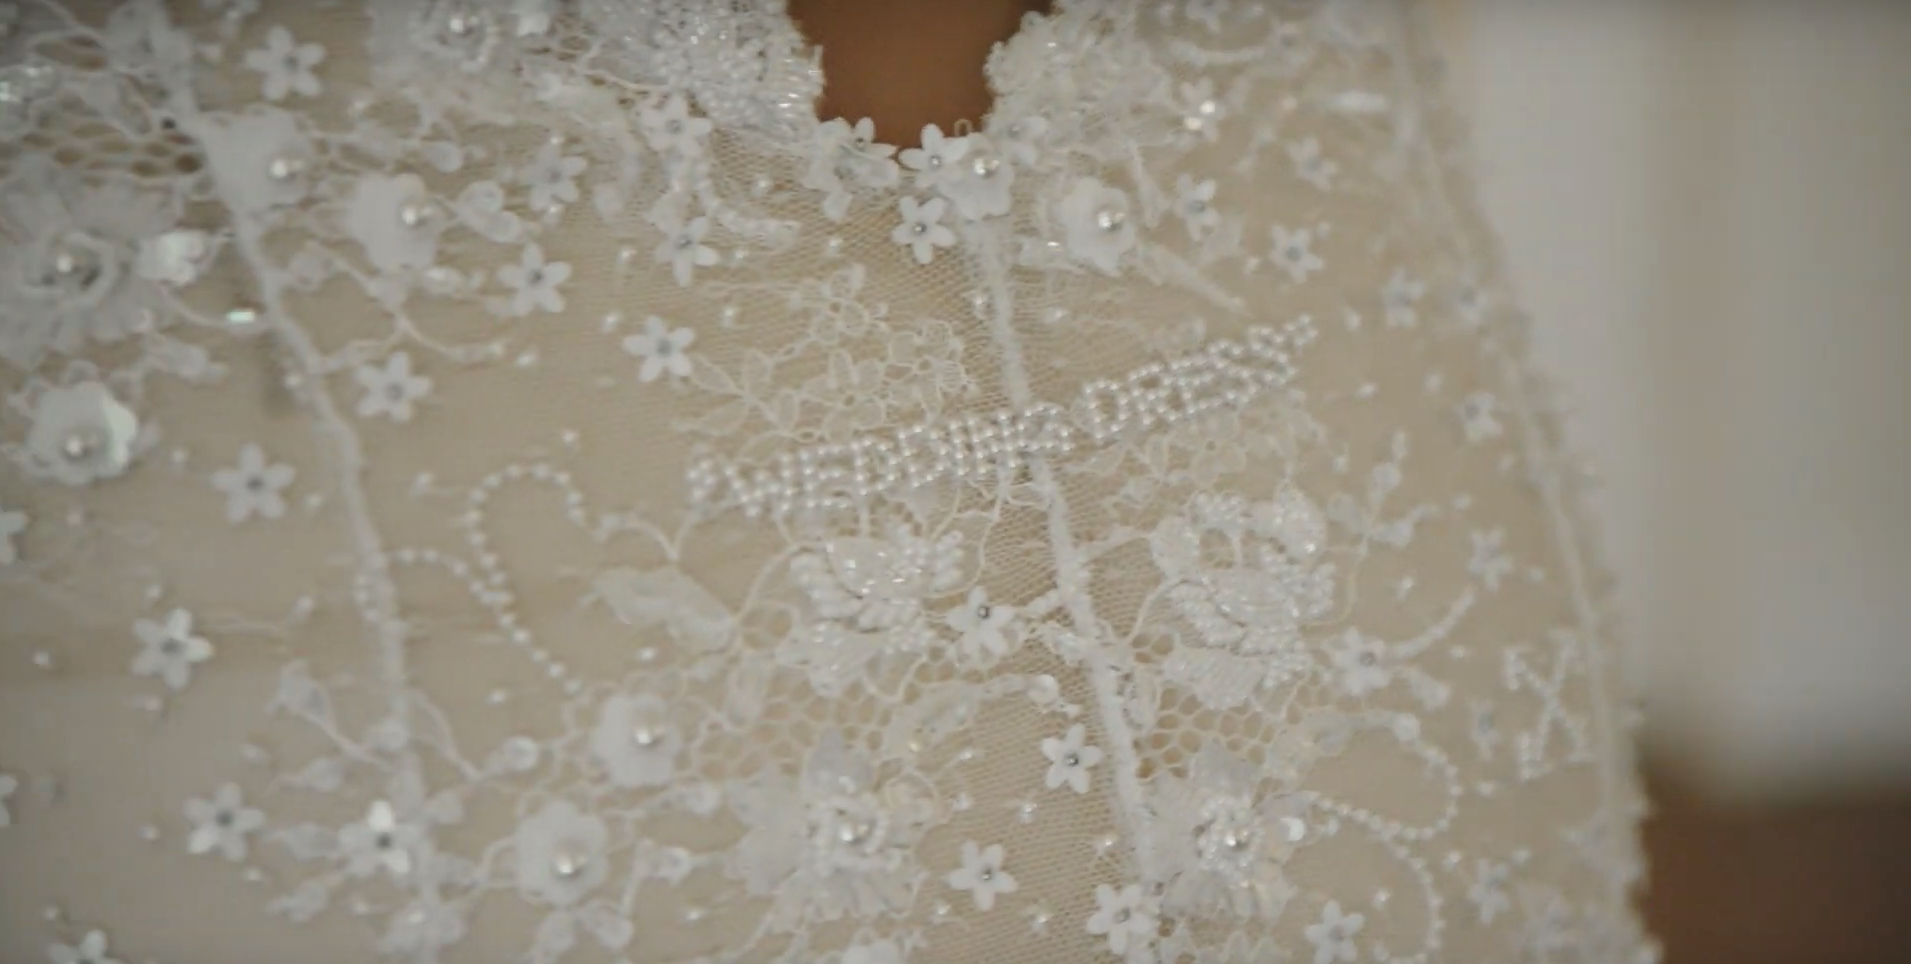 Hailey Bieber's wedding dress has ignited a fierce grammatical debate |  Vogue India